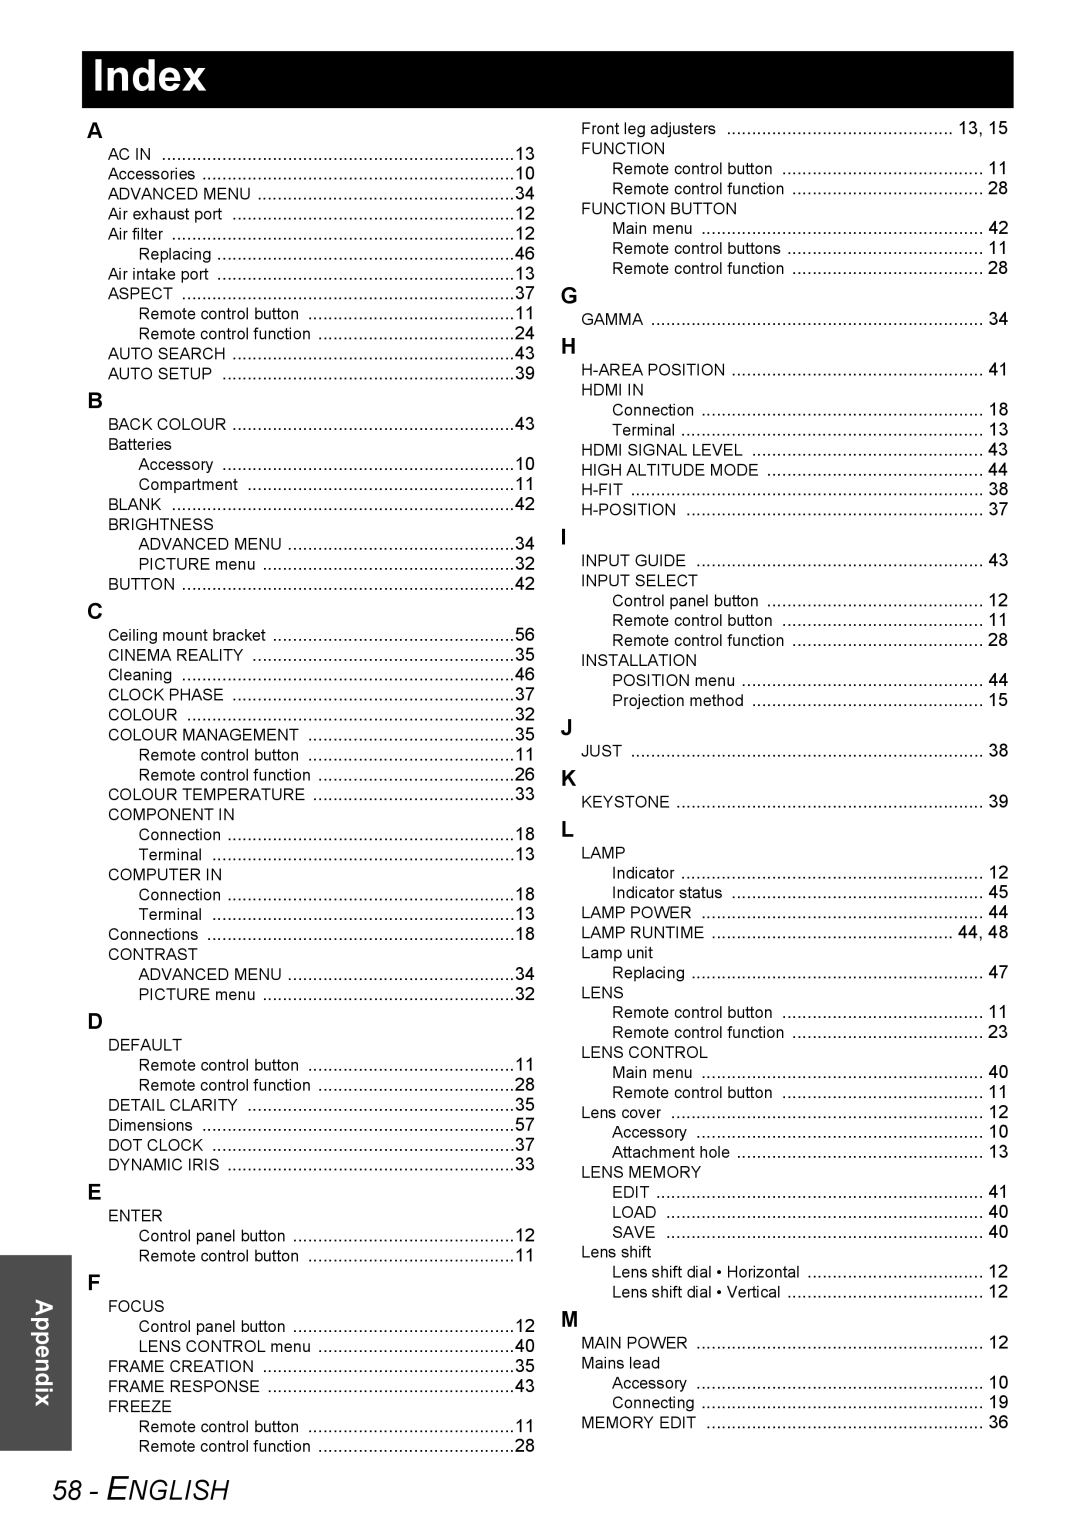 Panasonic PT-AE3000E manual Index, English, Appendix 